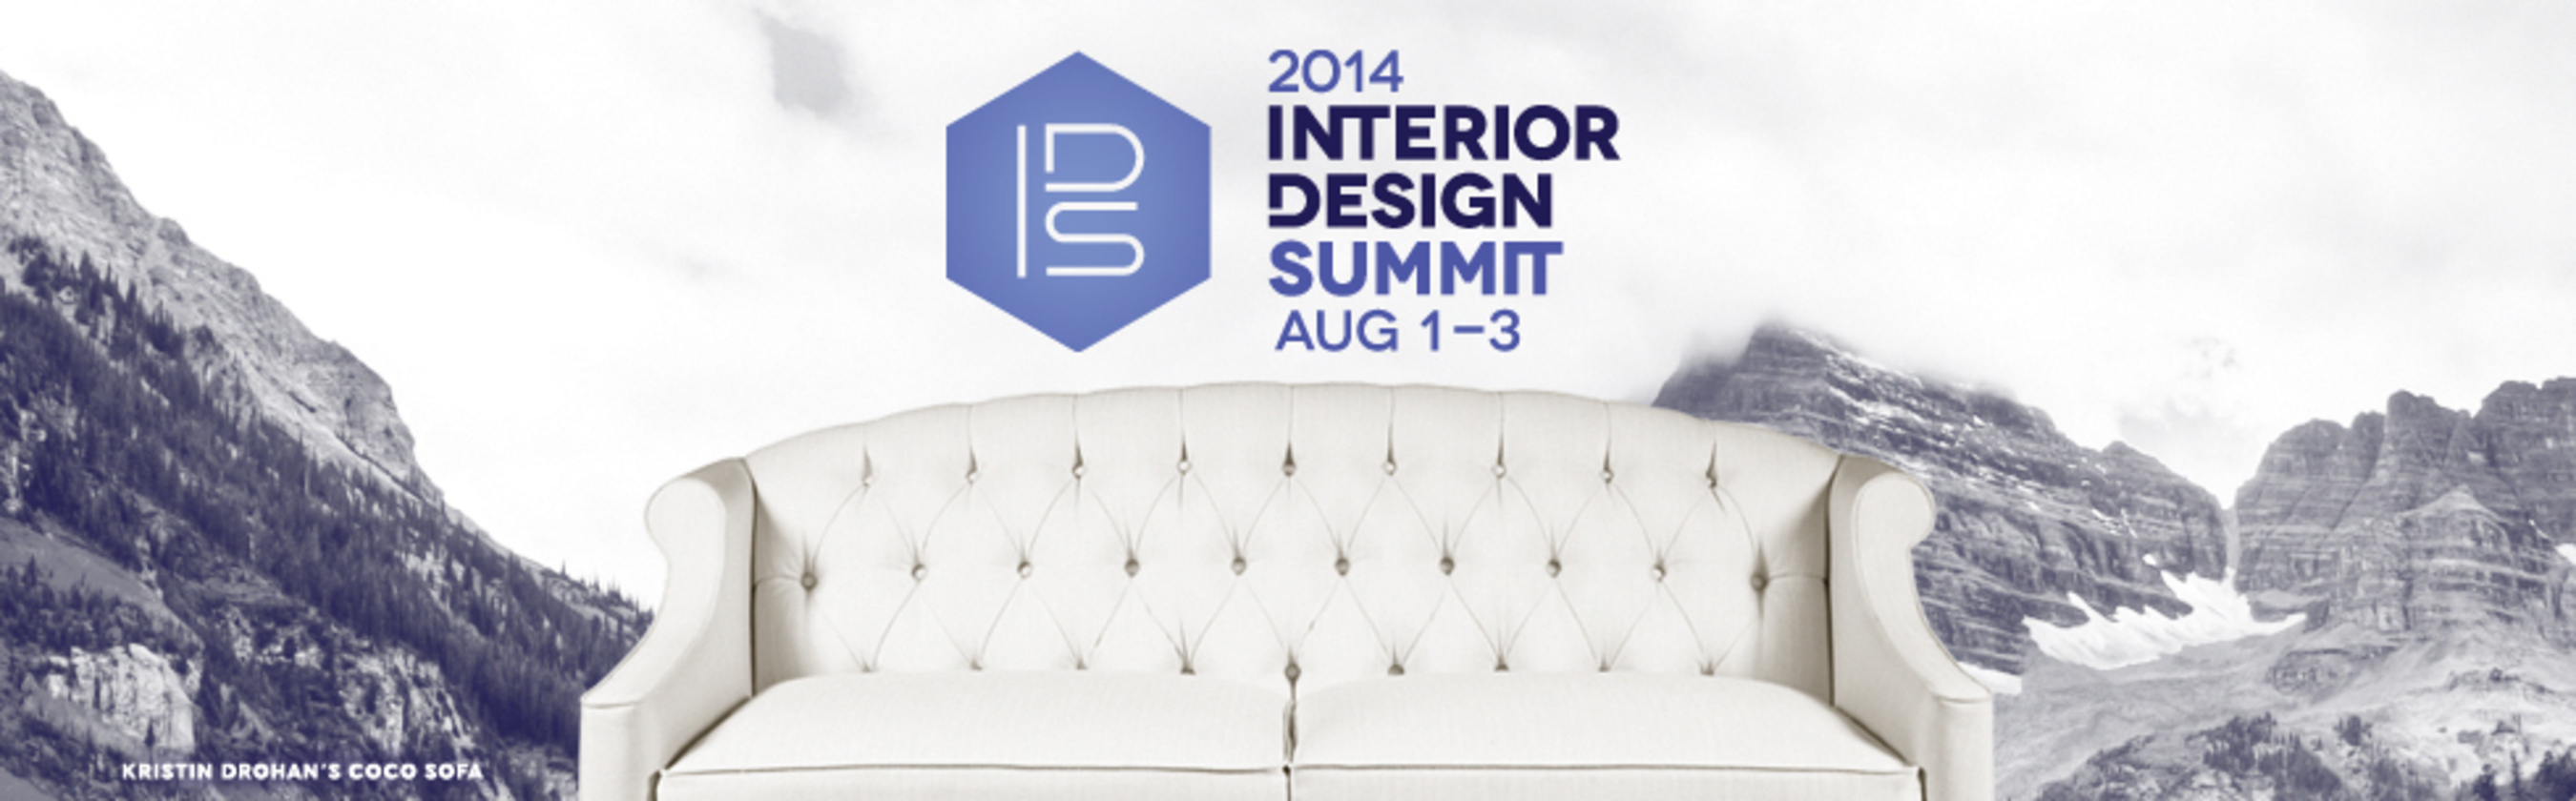 2014 Interior Design Summit (PRNewsFoto/Design Success University)